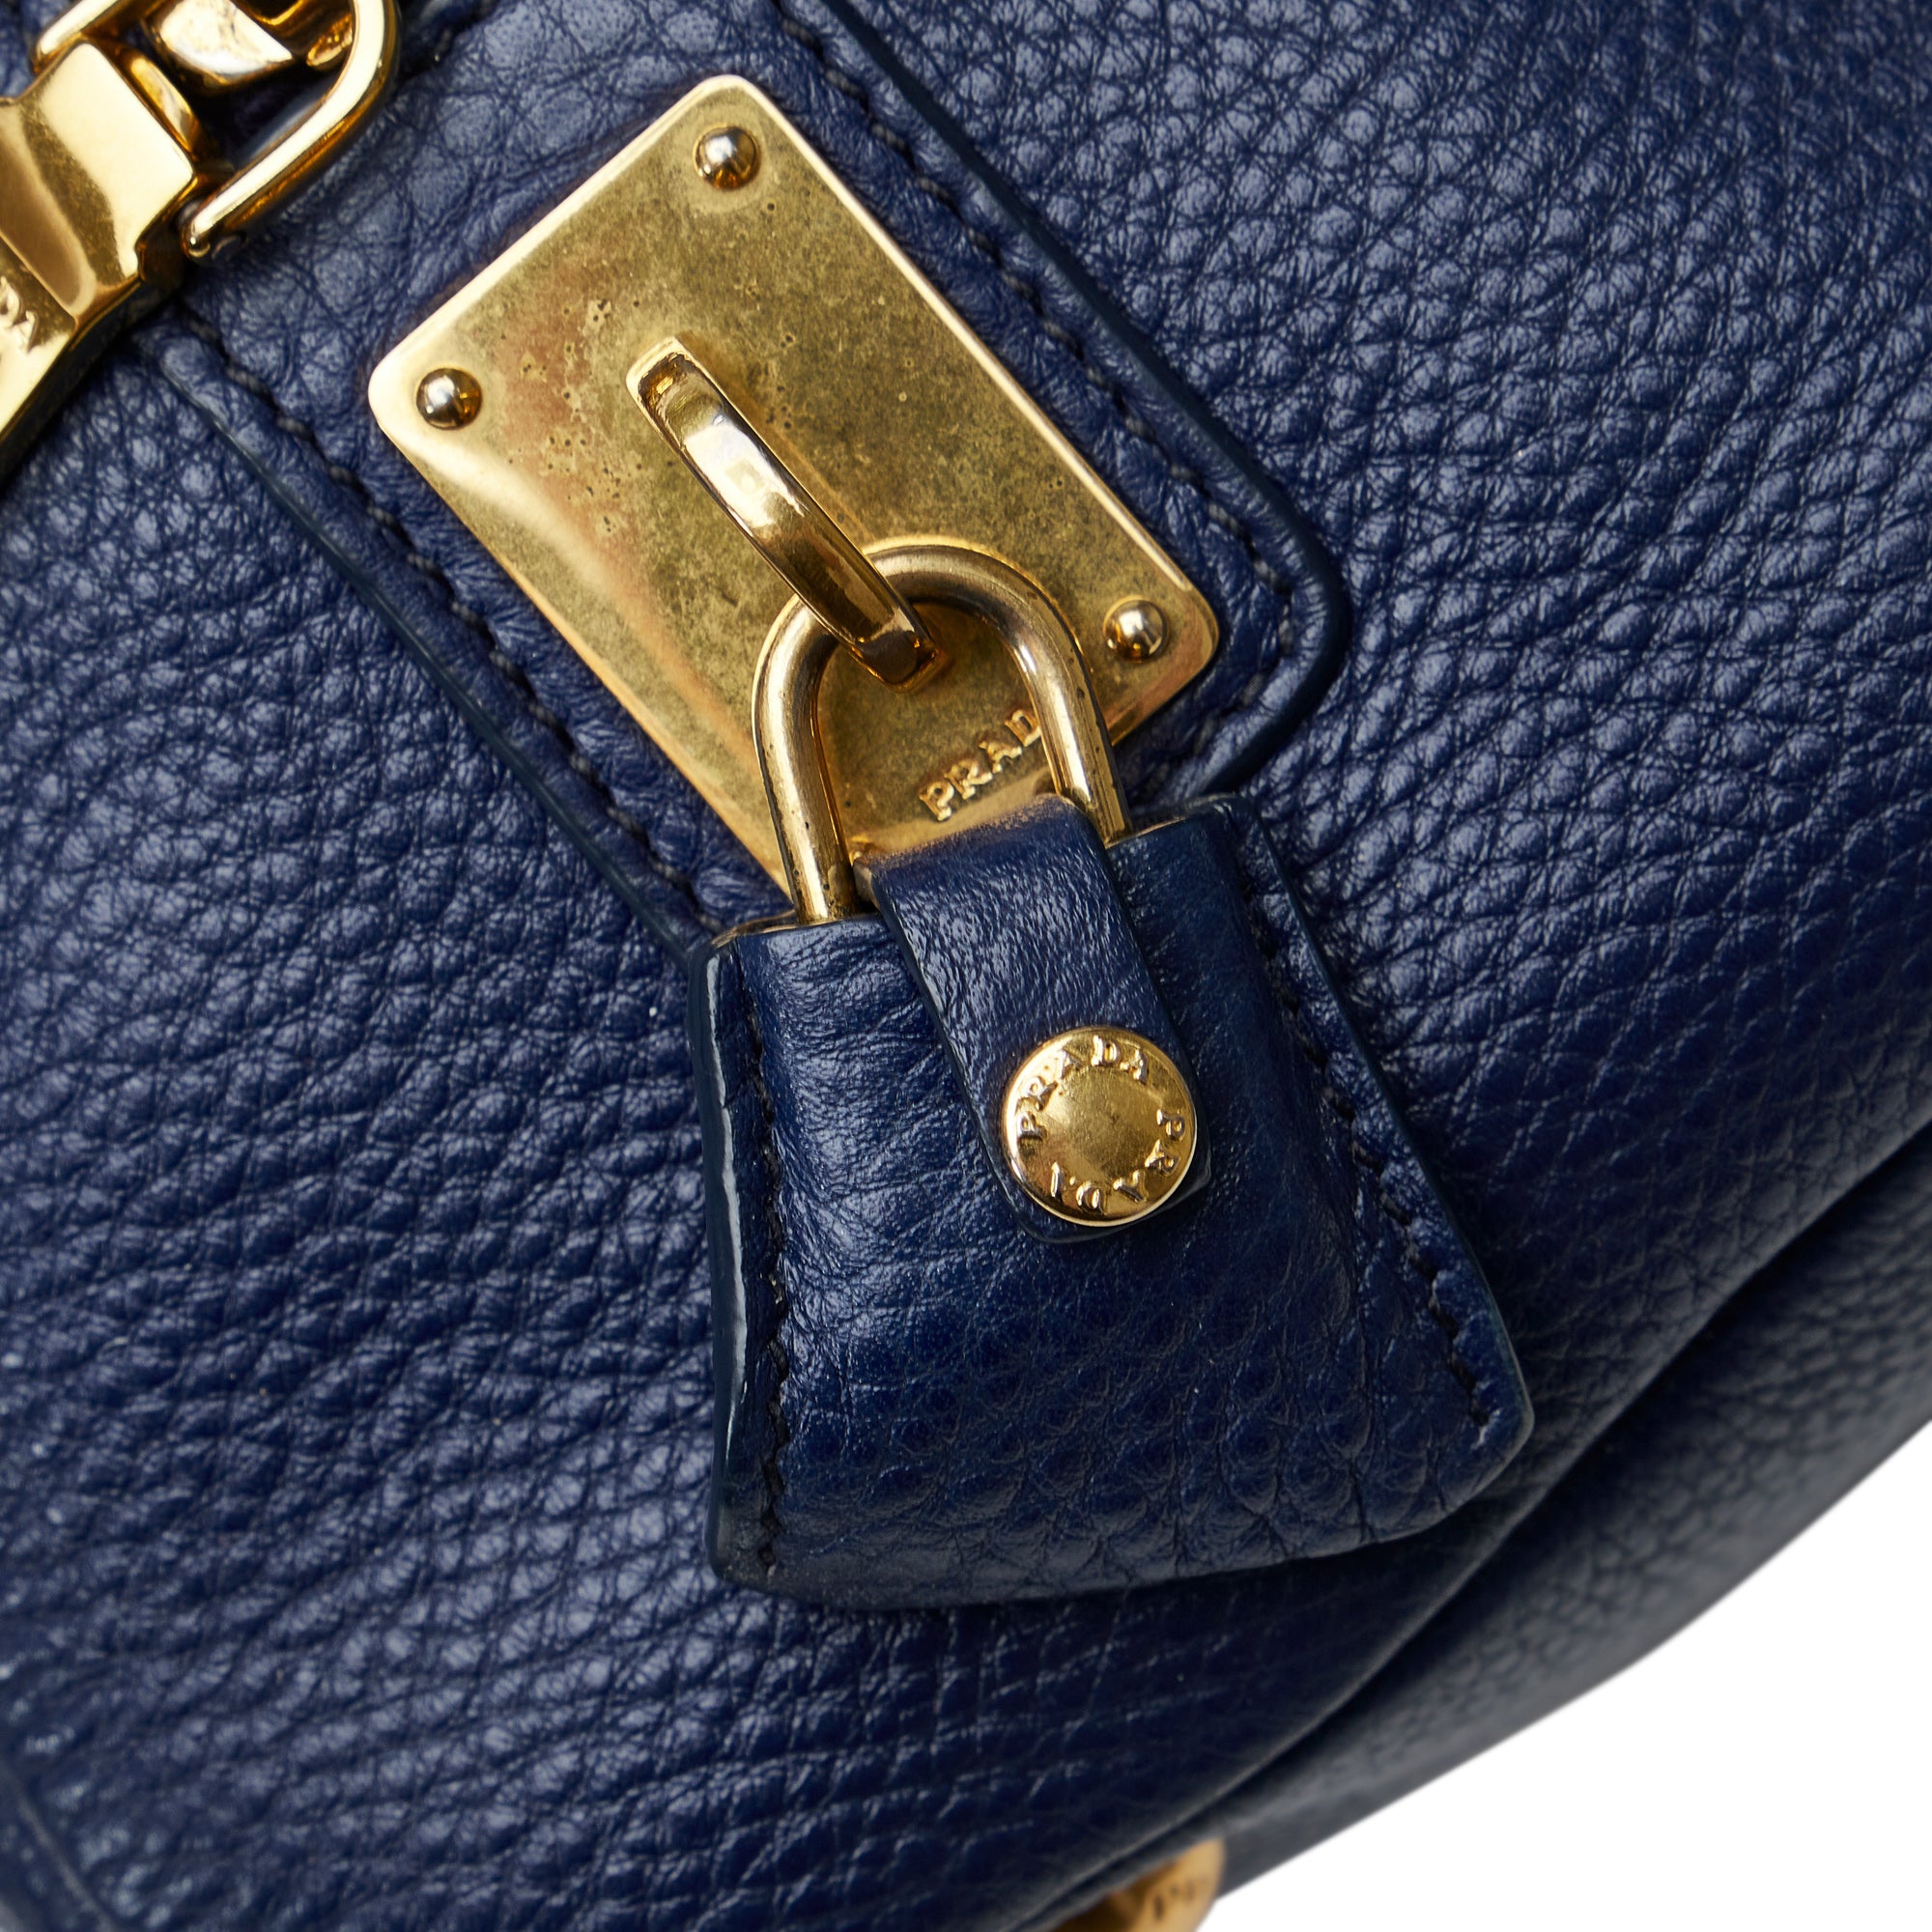 Prada Textured Camera Bag in Blue